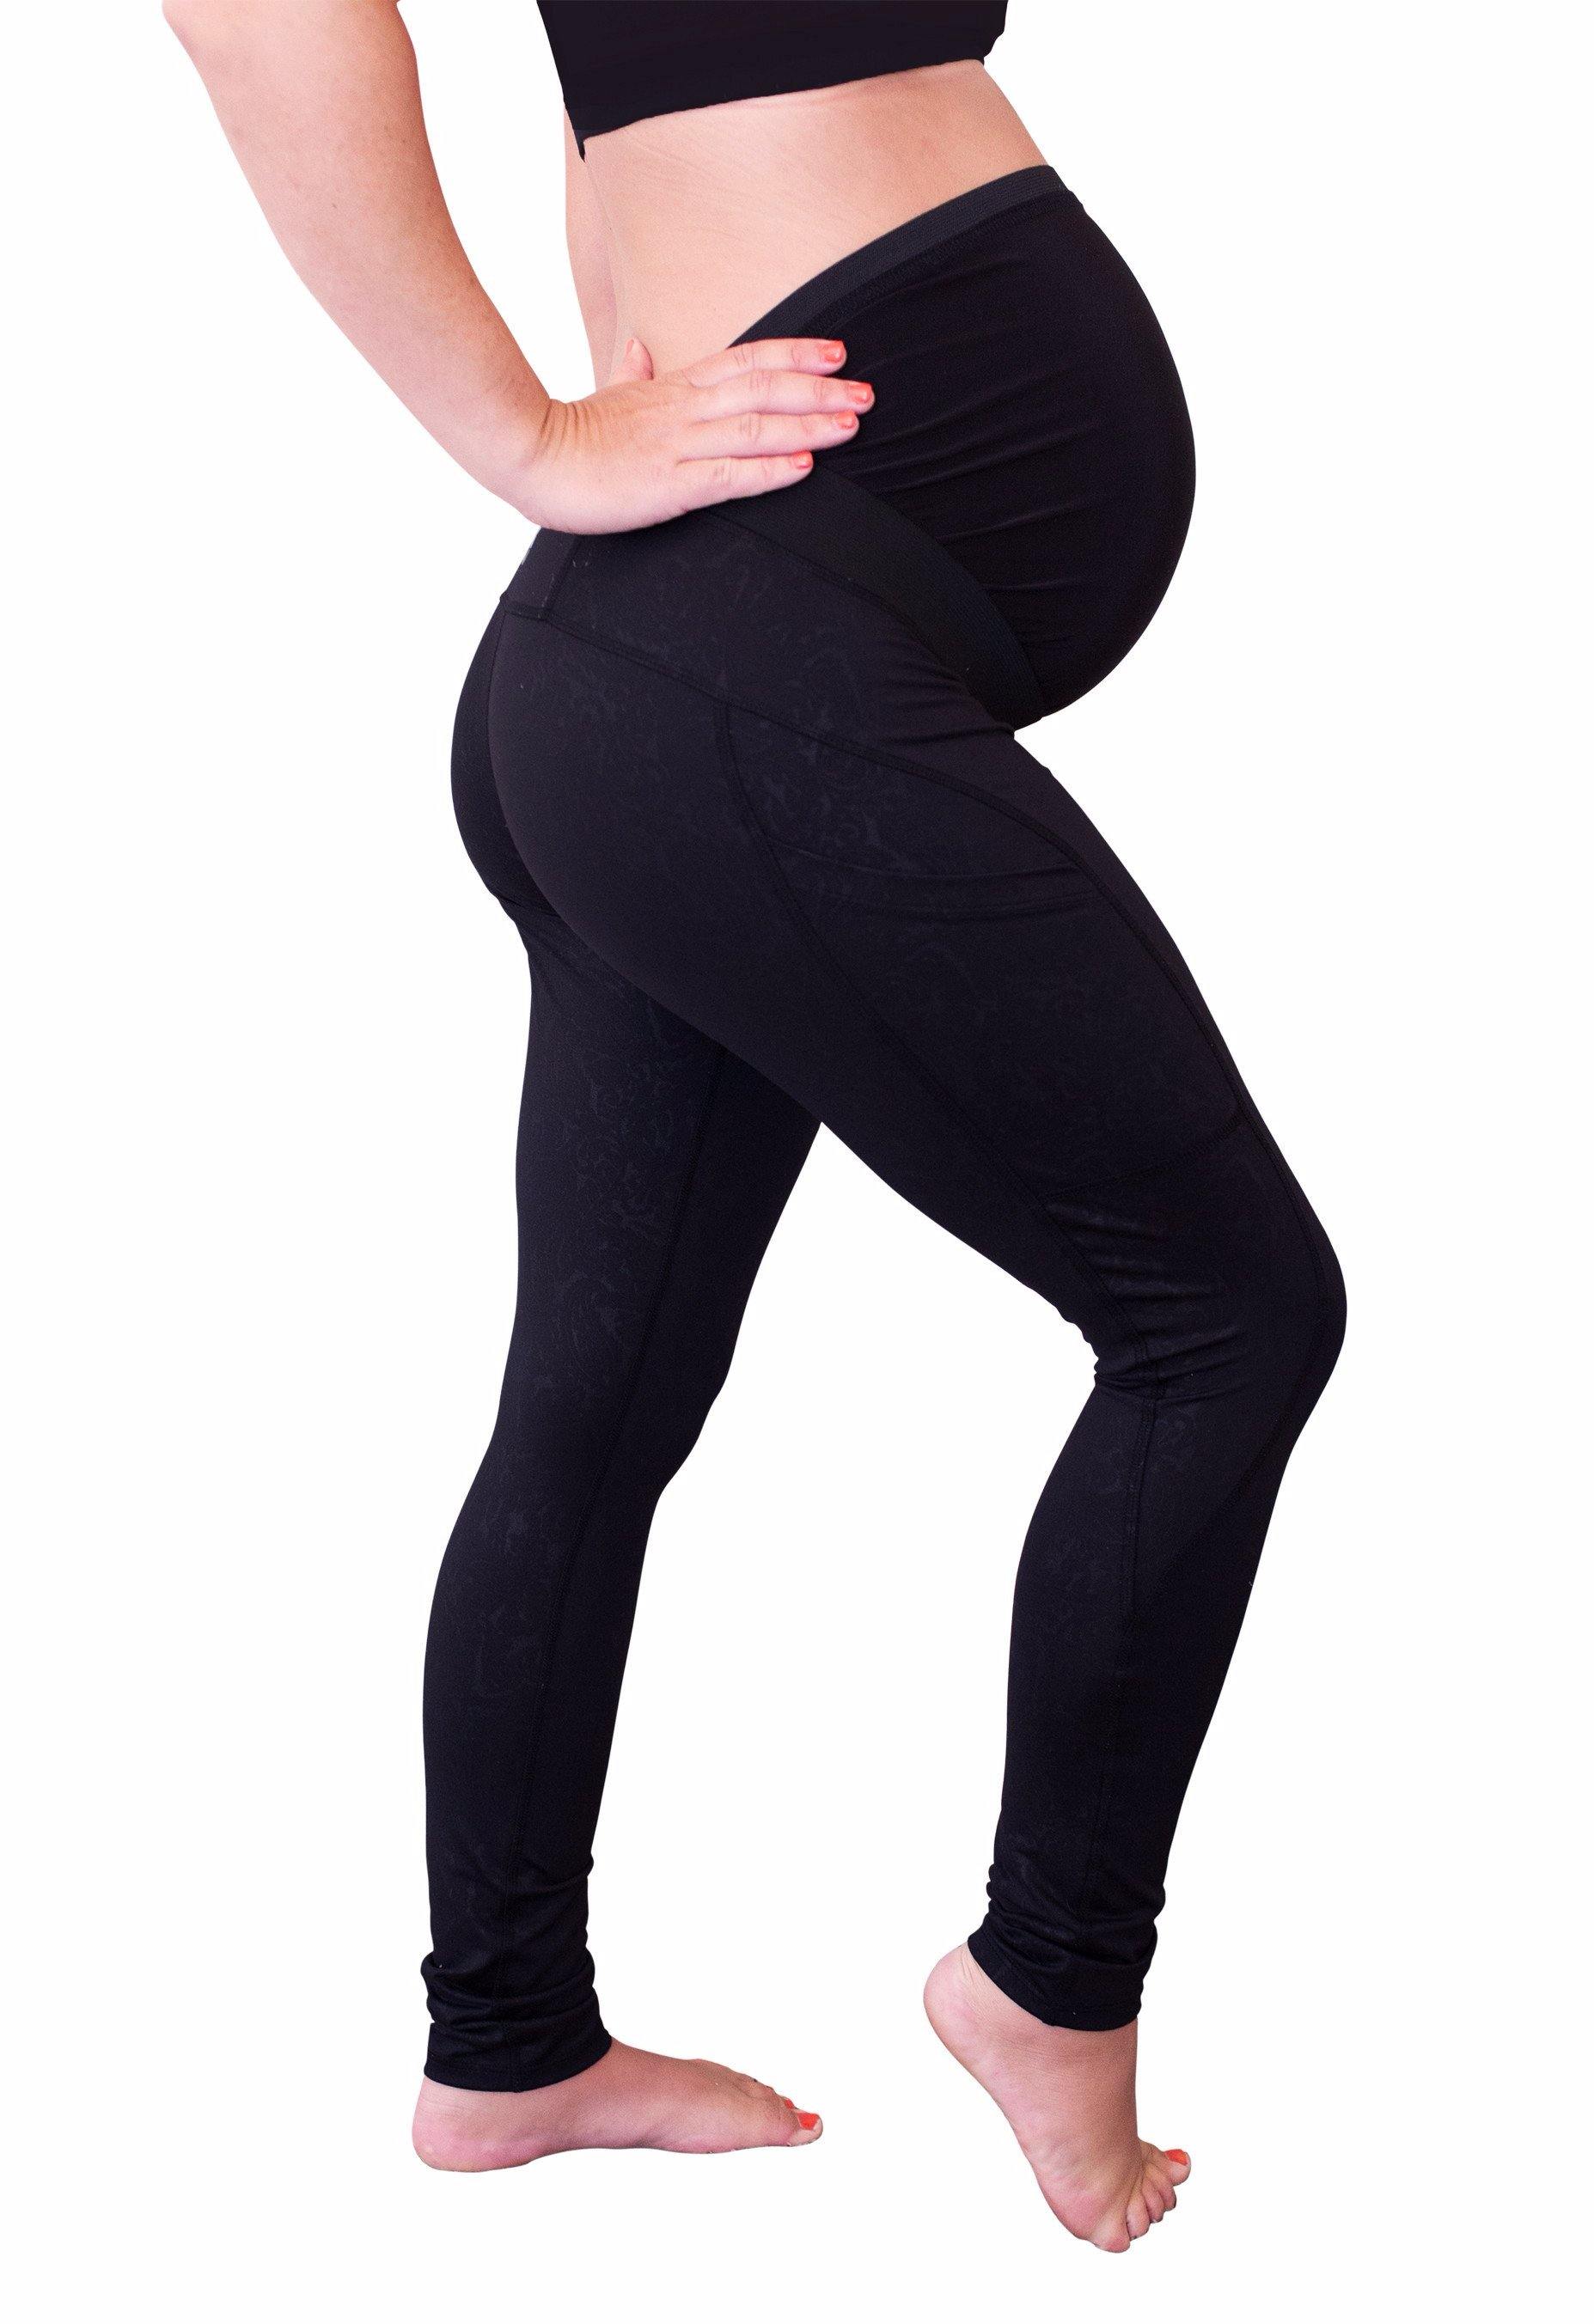 Women's Size Medium Maternity Leggings Belly Support Yoga Pants